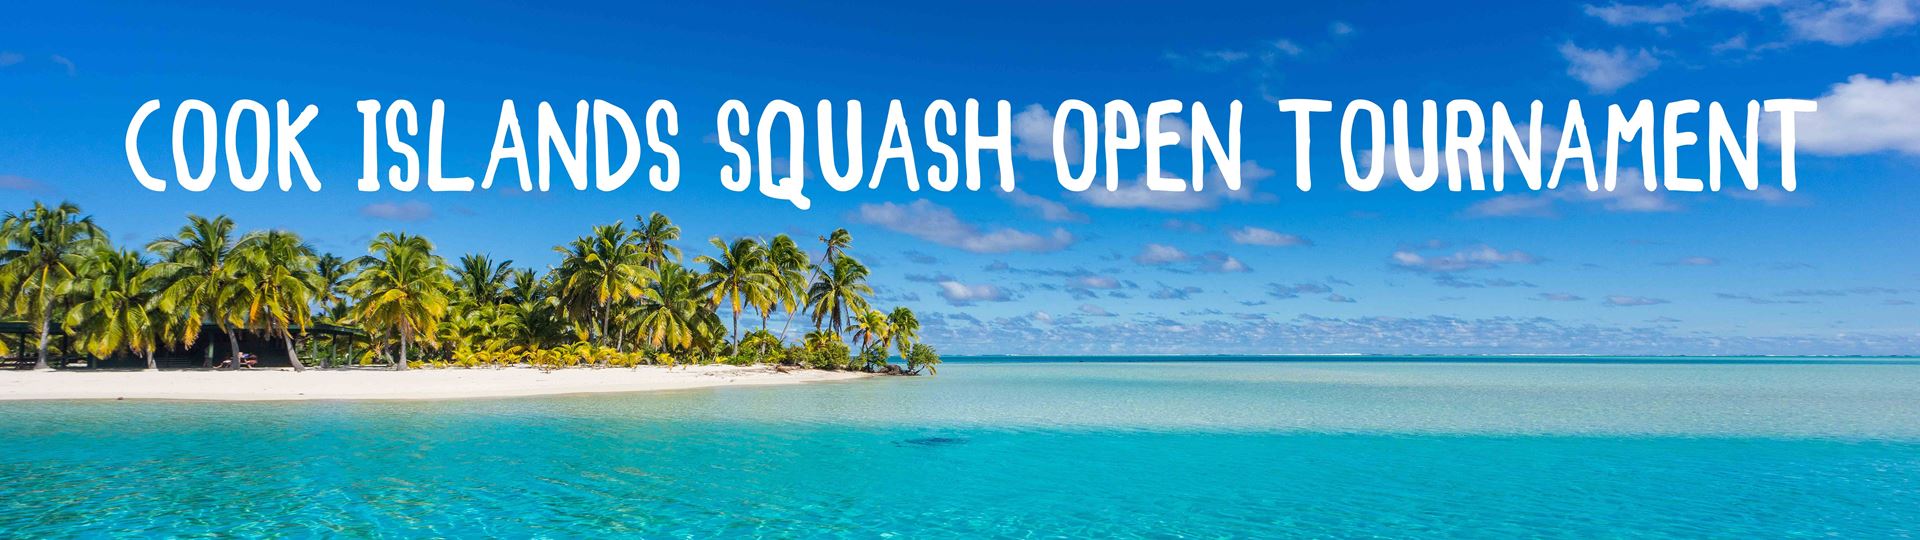 Cook Islands Squash Open